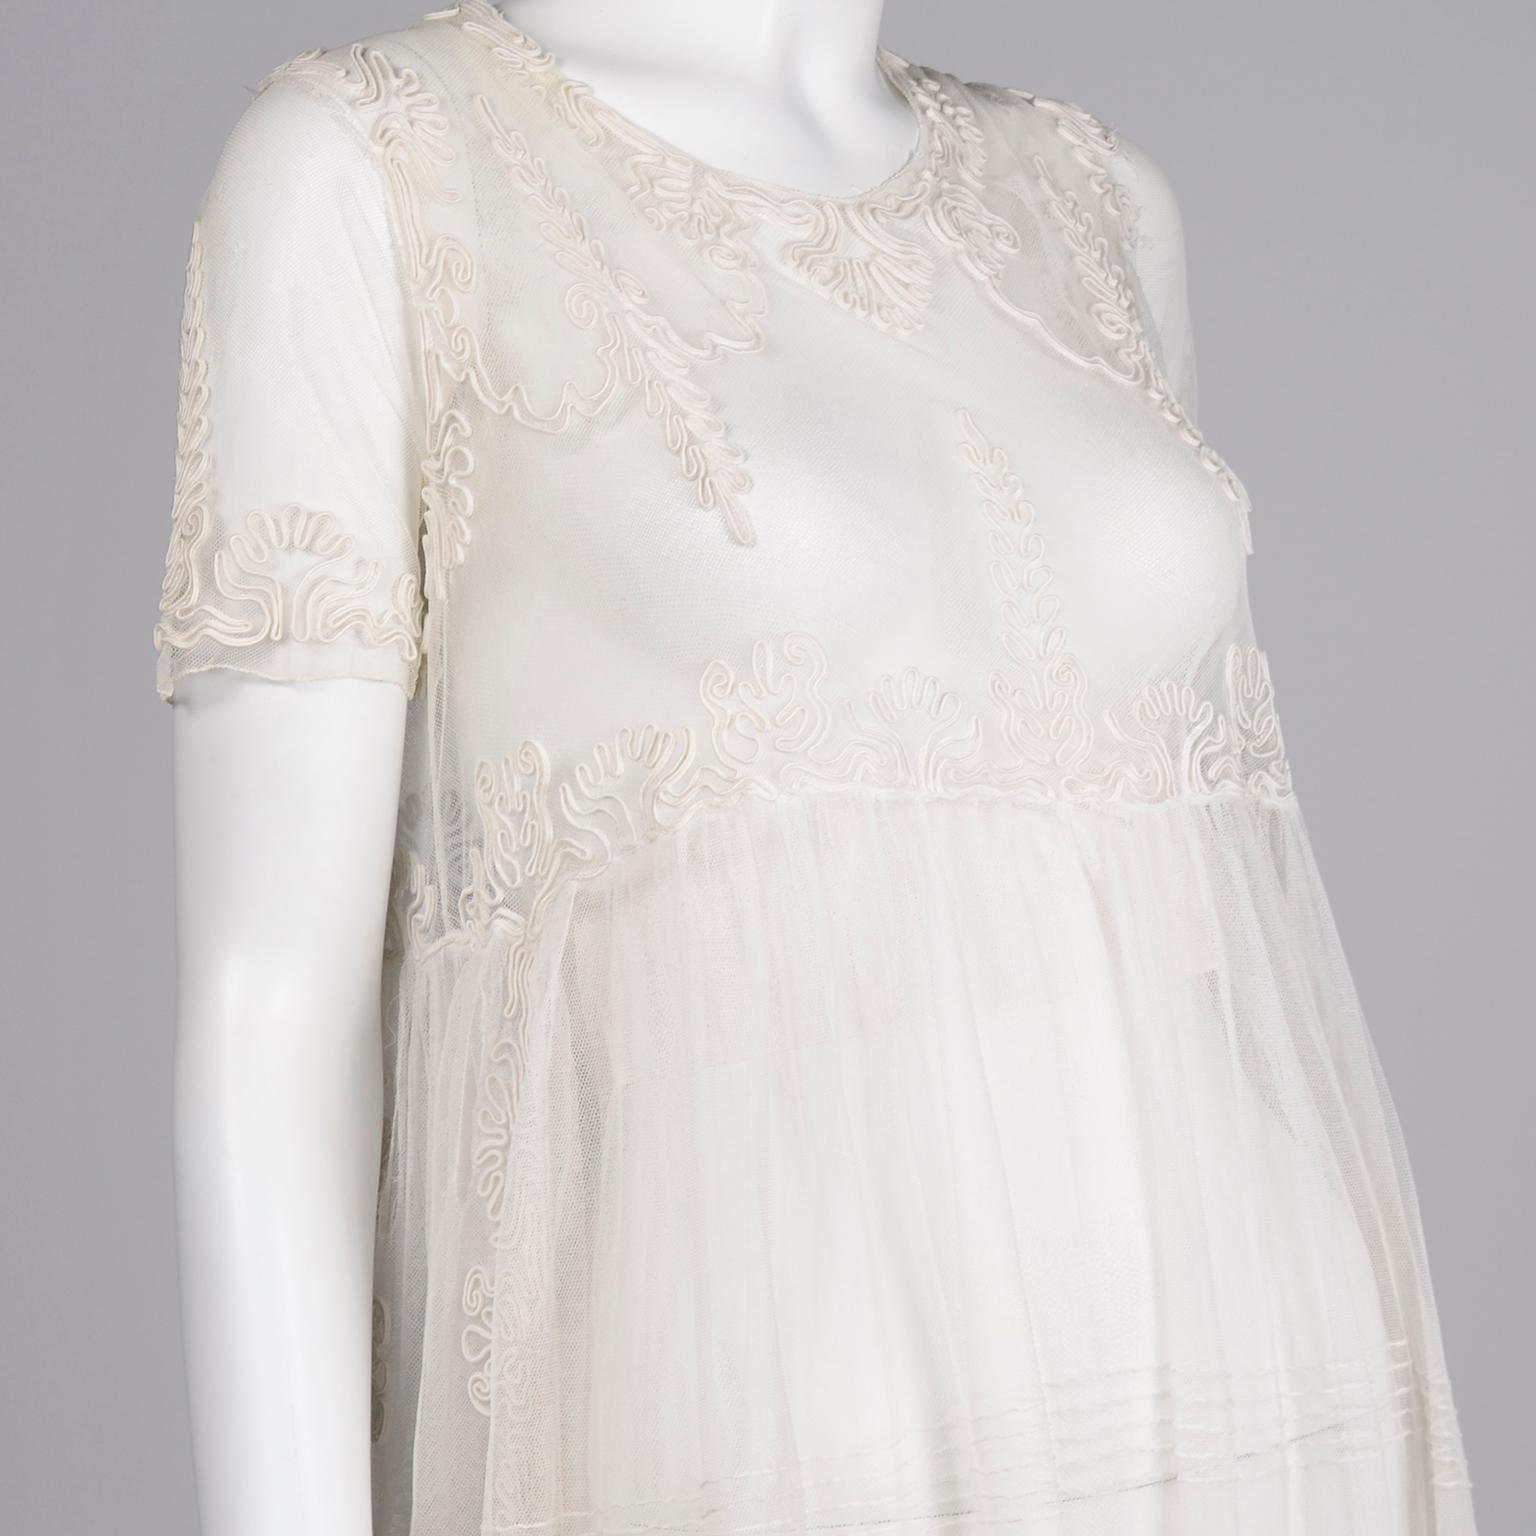 Antique Edwardian 1910s Vintage Ivory Net Tulle Dress W Soutache Embroidery Trim For Sale 3